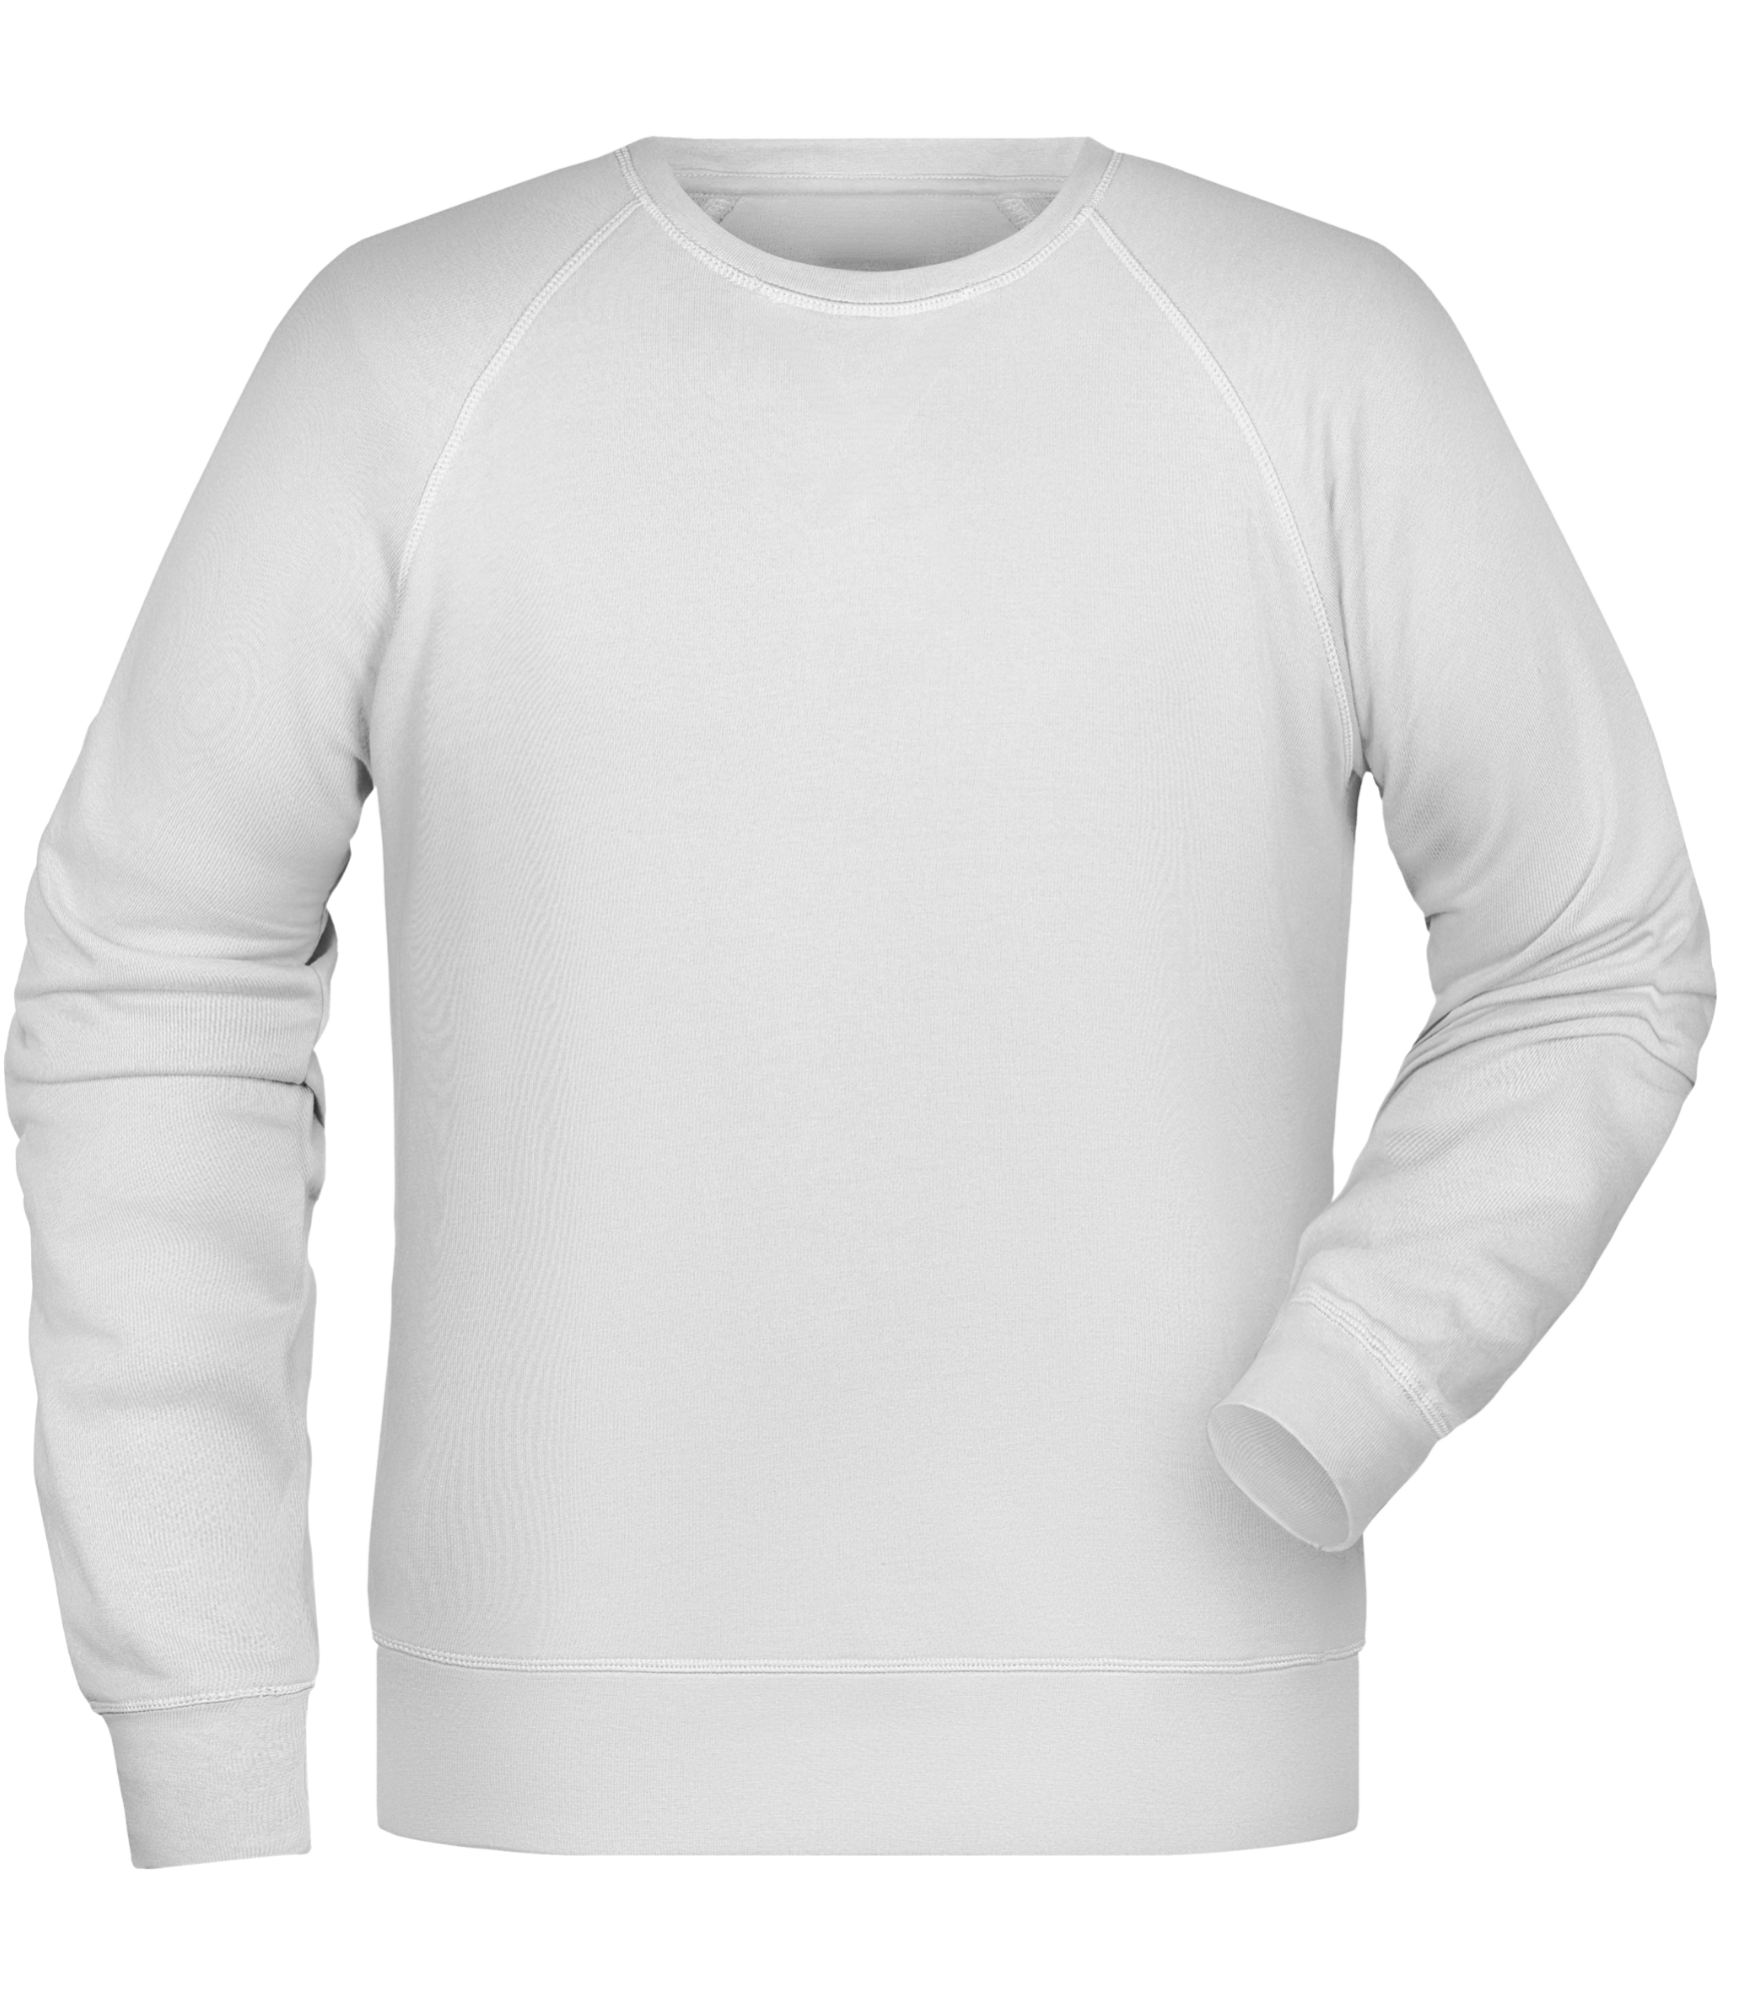 B&C Sweatshirt ID.002 Cotton Rich